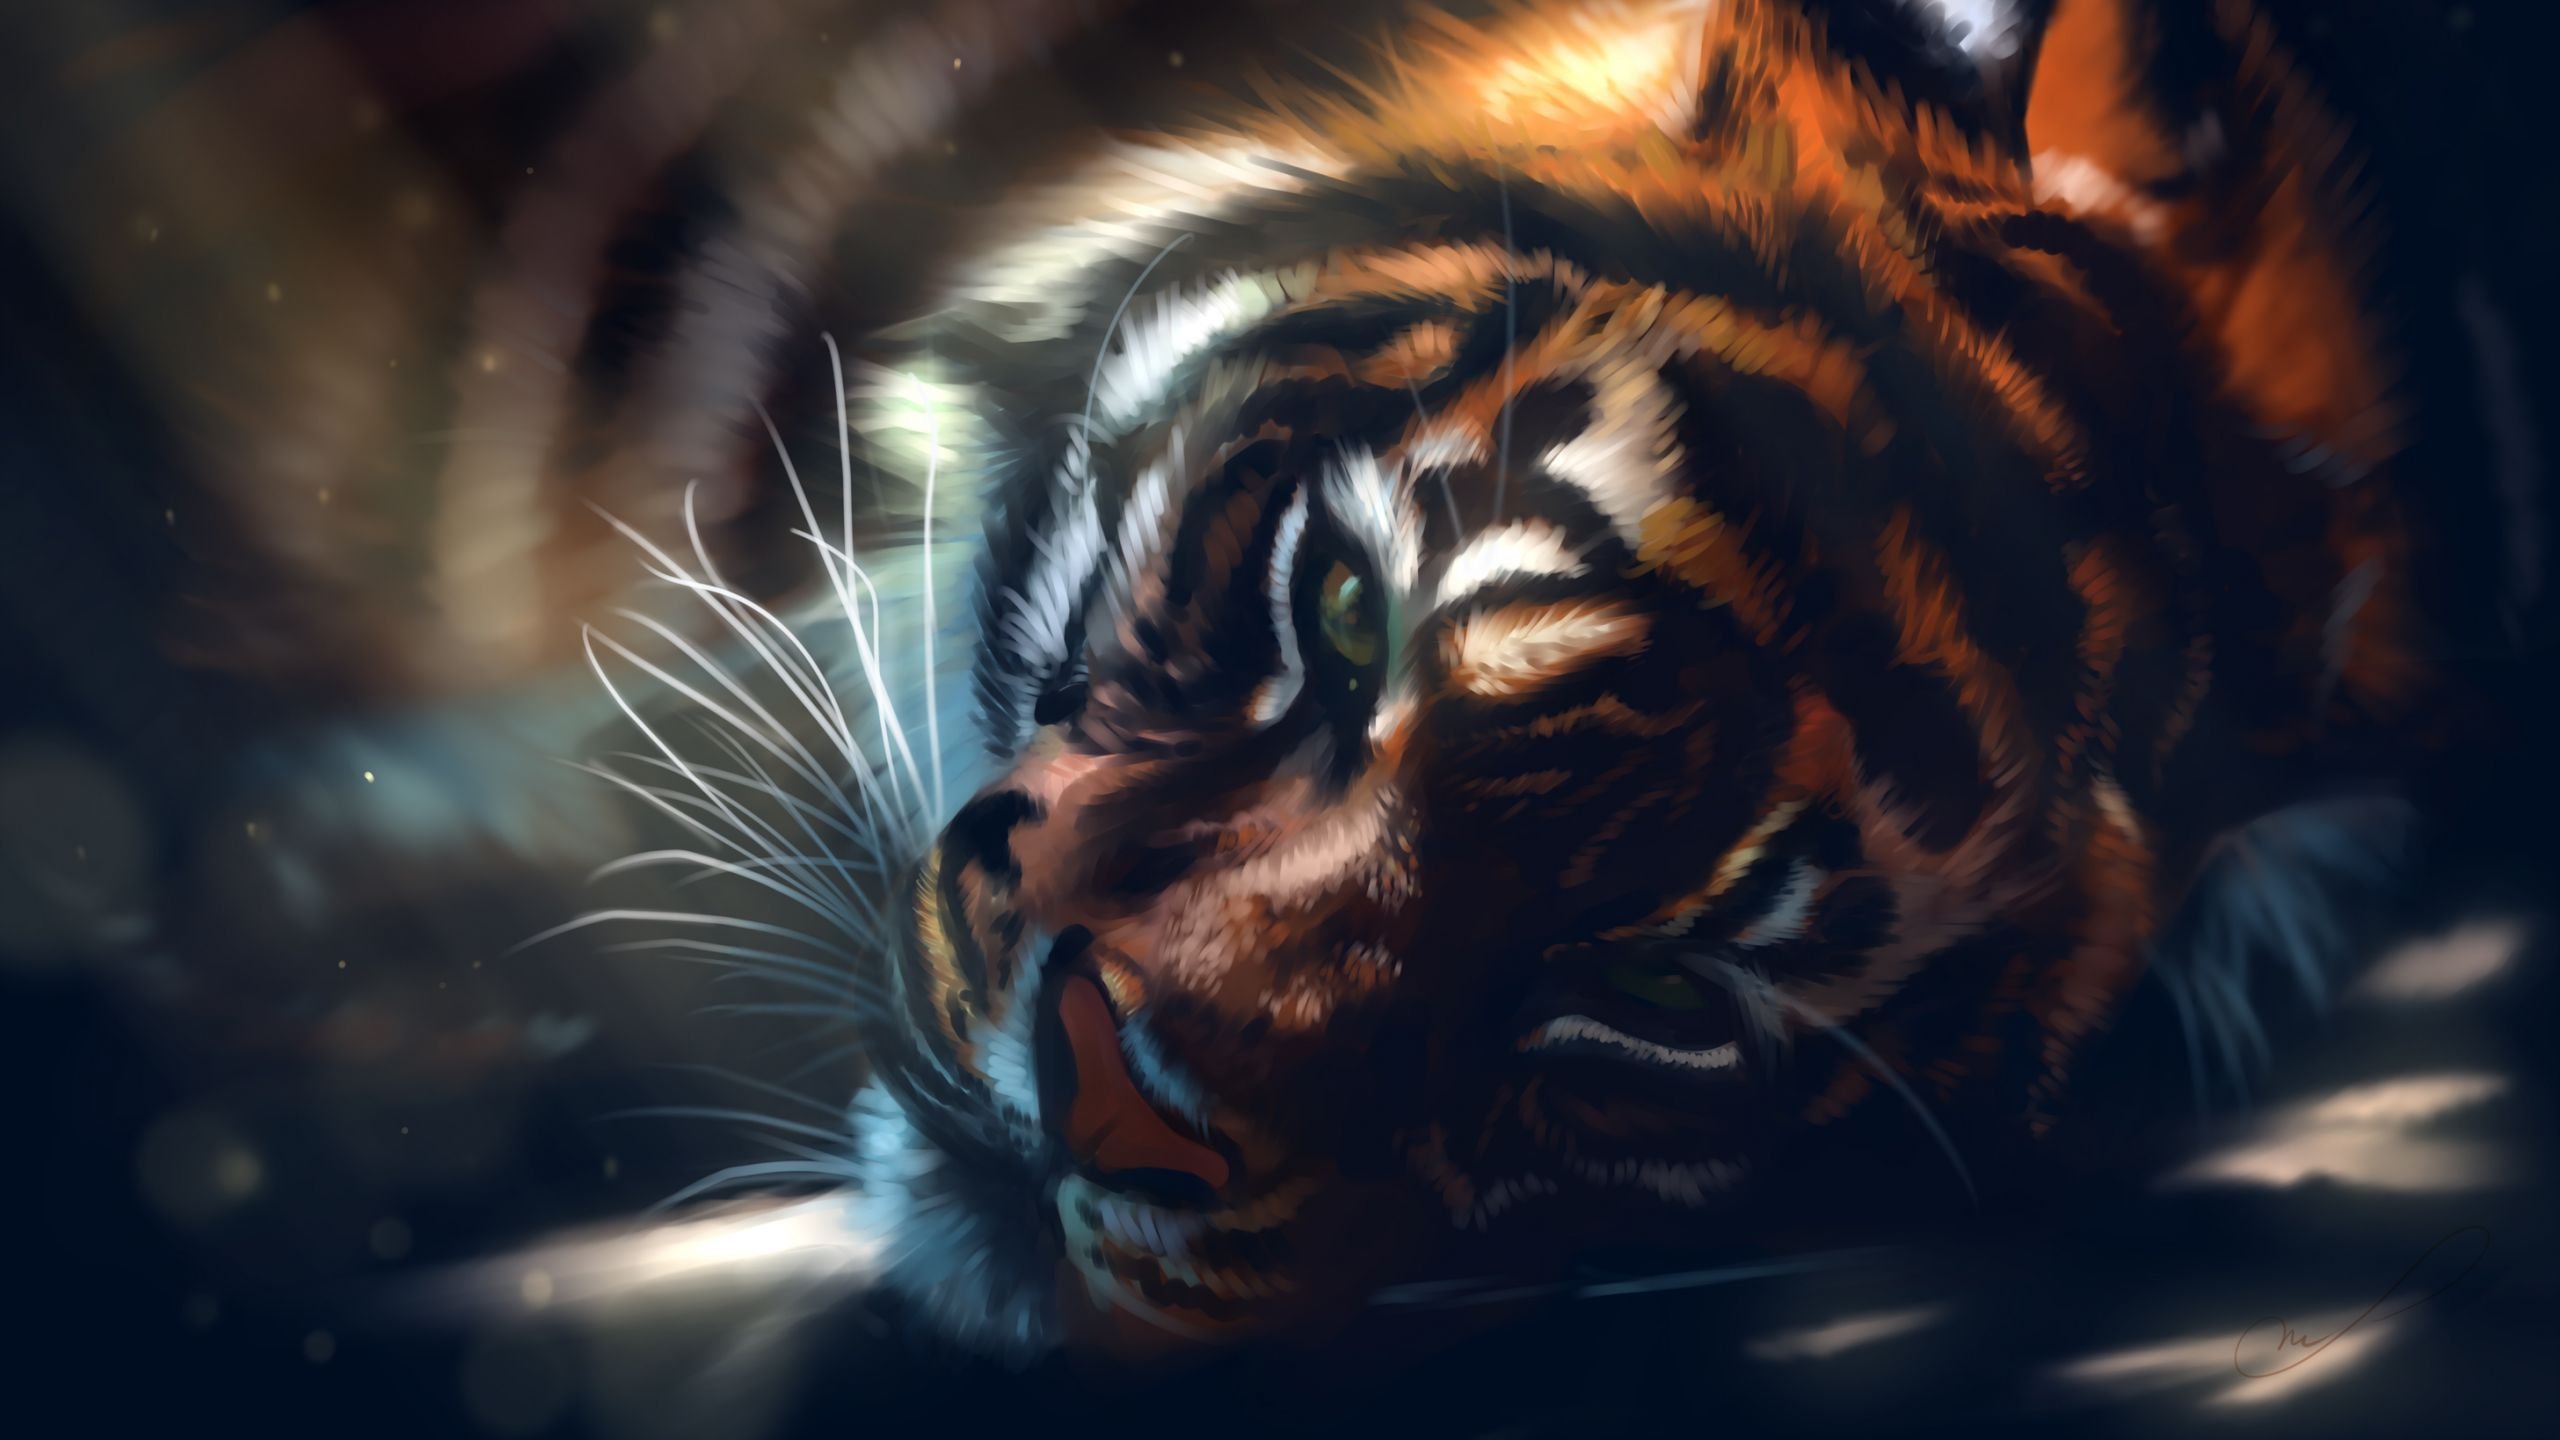 Тигр красивый арт